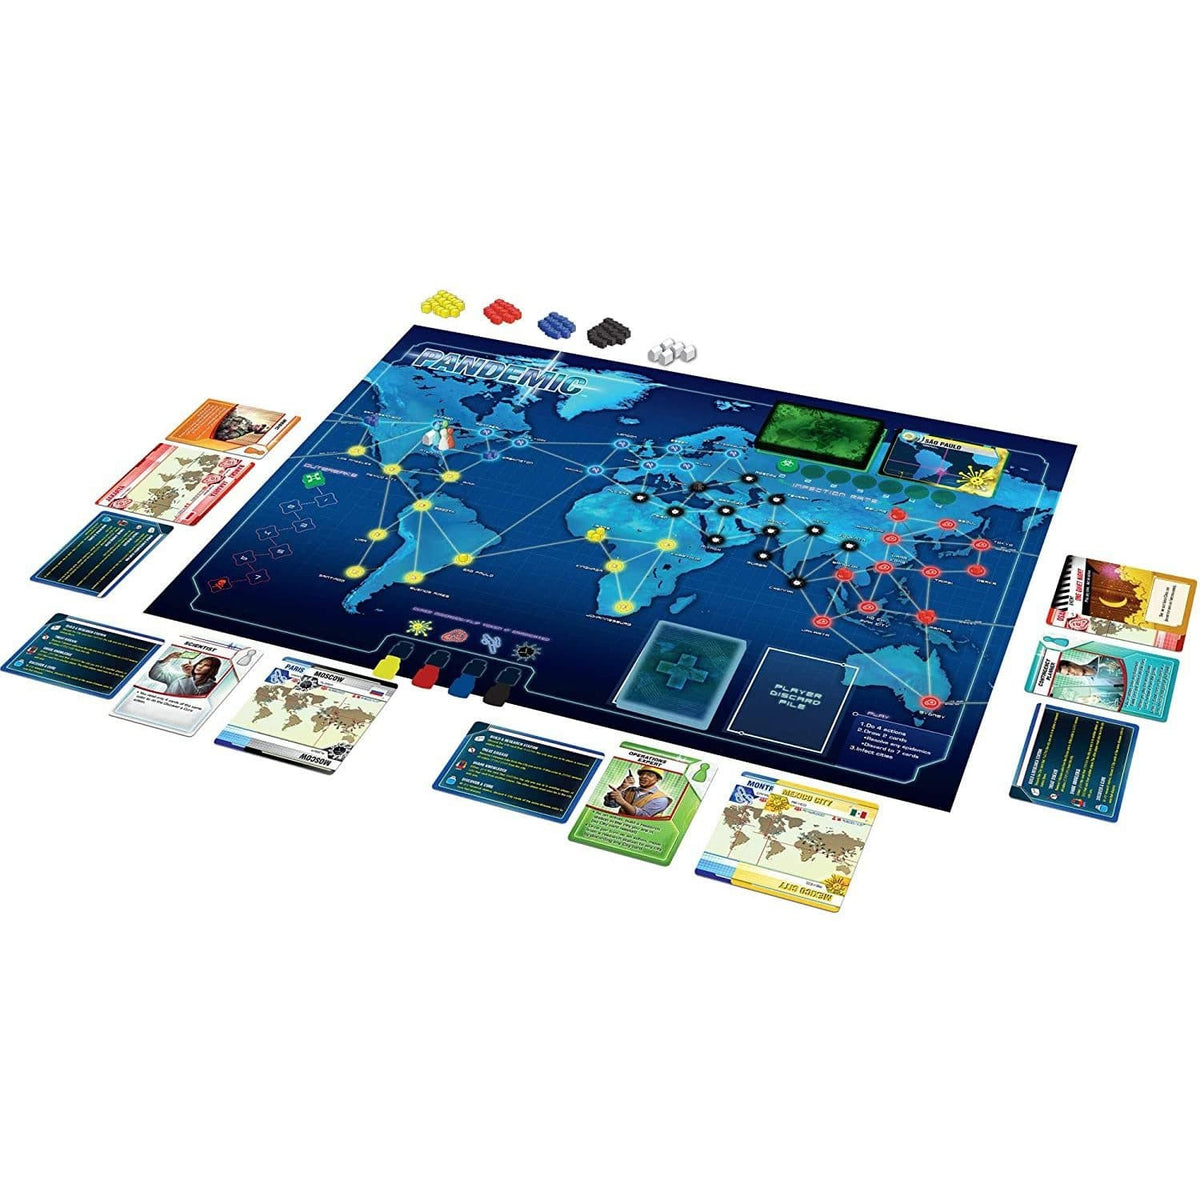 Pandemic Asmodee Board Games